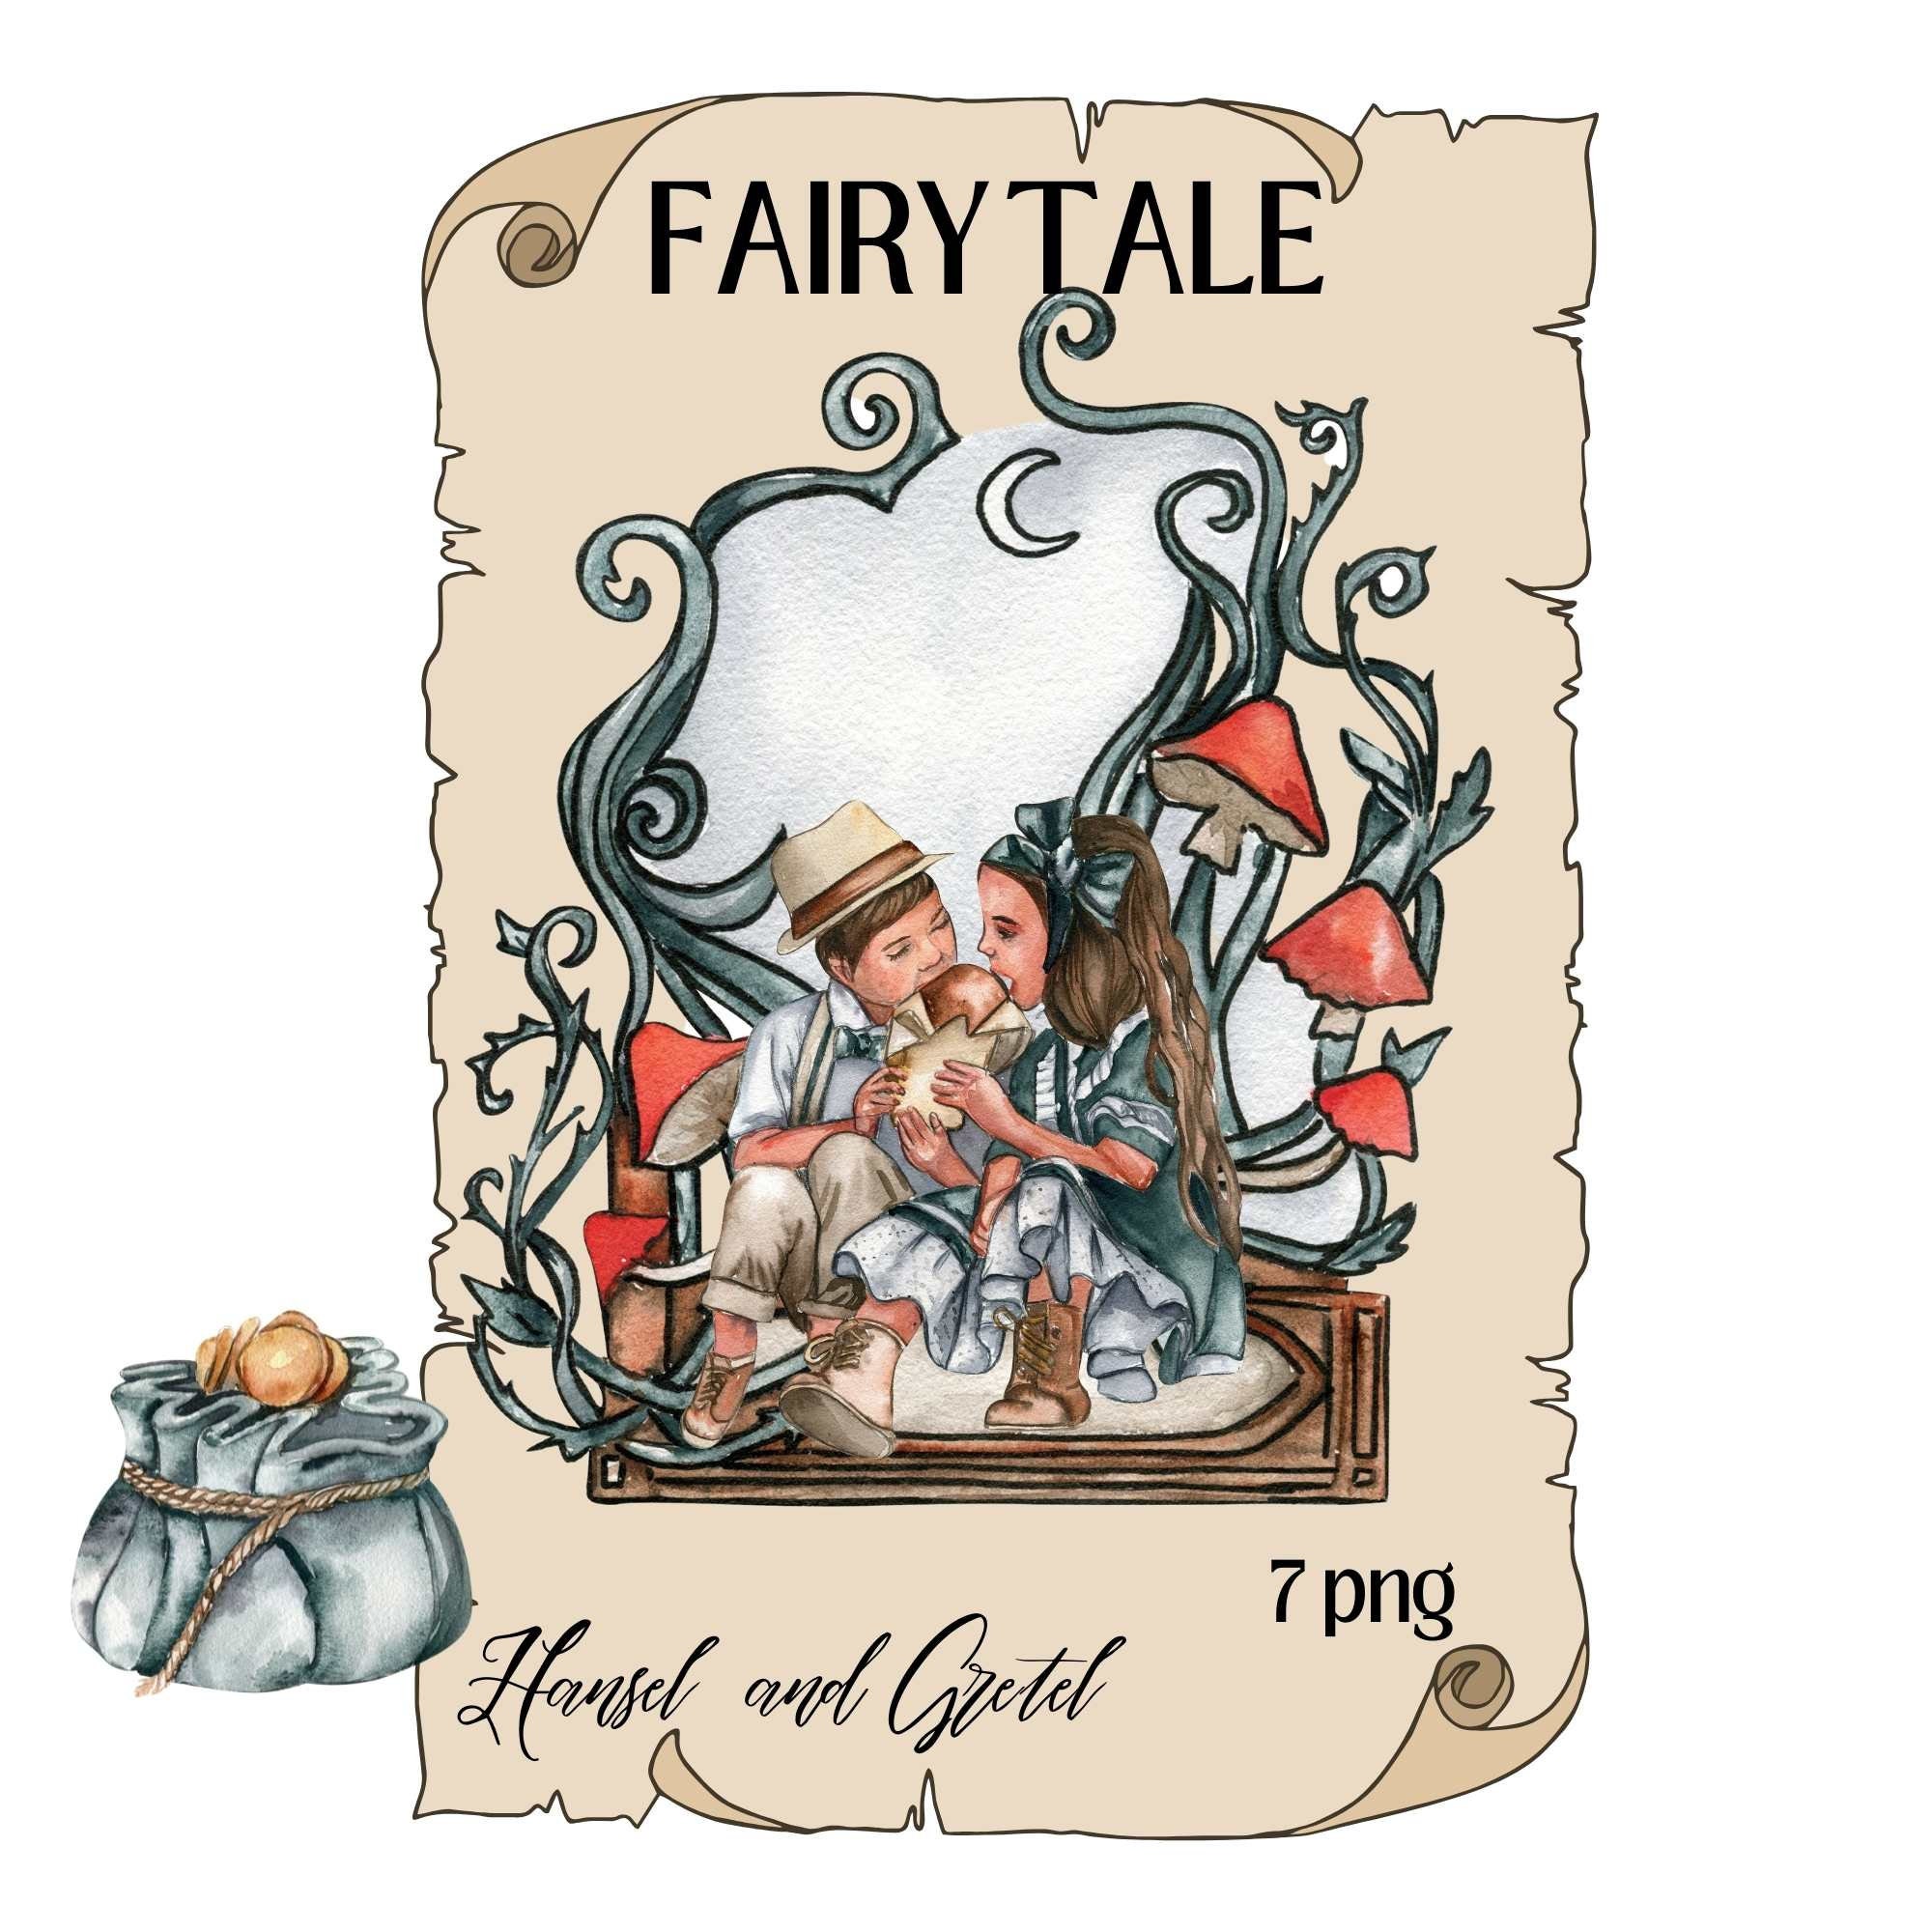 The fairytale of Hansel and Gretel, Fairytales